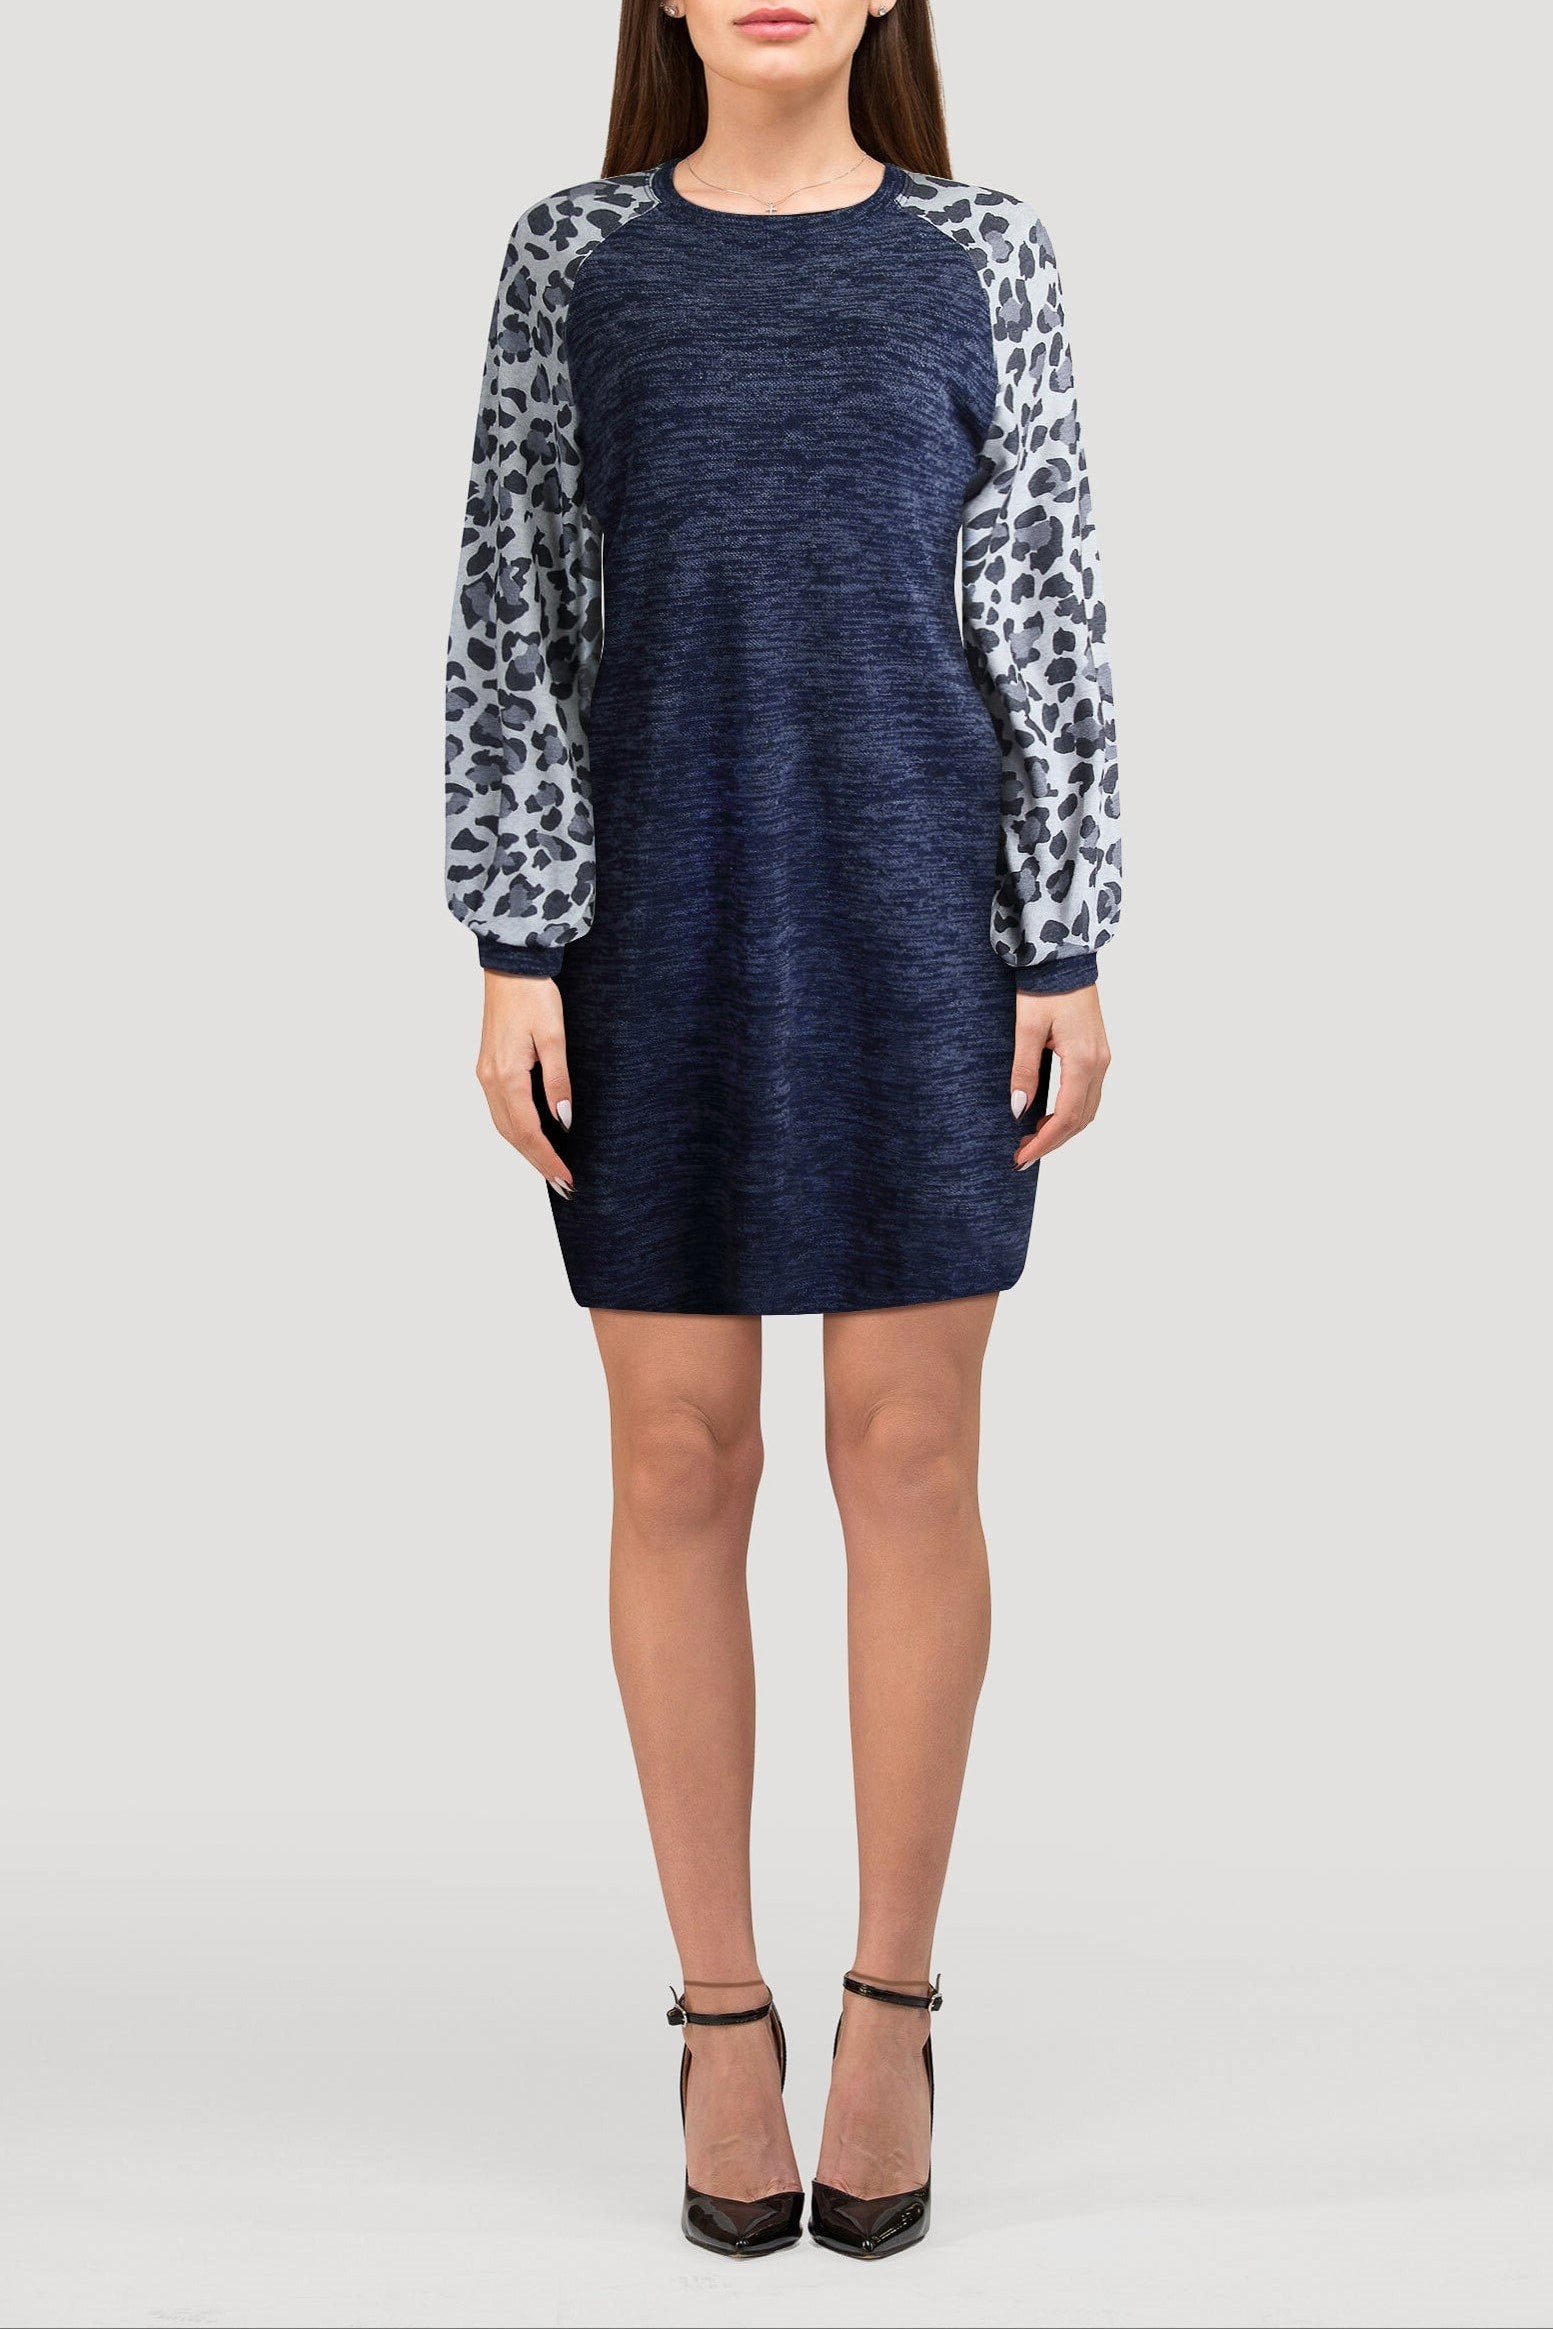 Darcey Leopard Sleeve Mini Dress - S / Navy Blue - Clothing